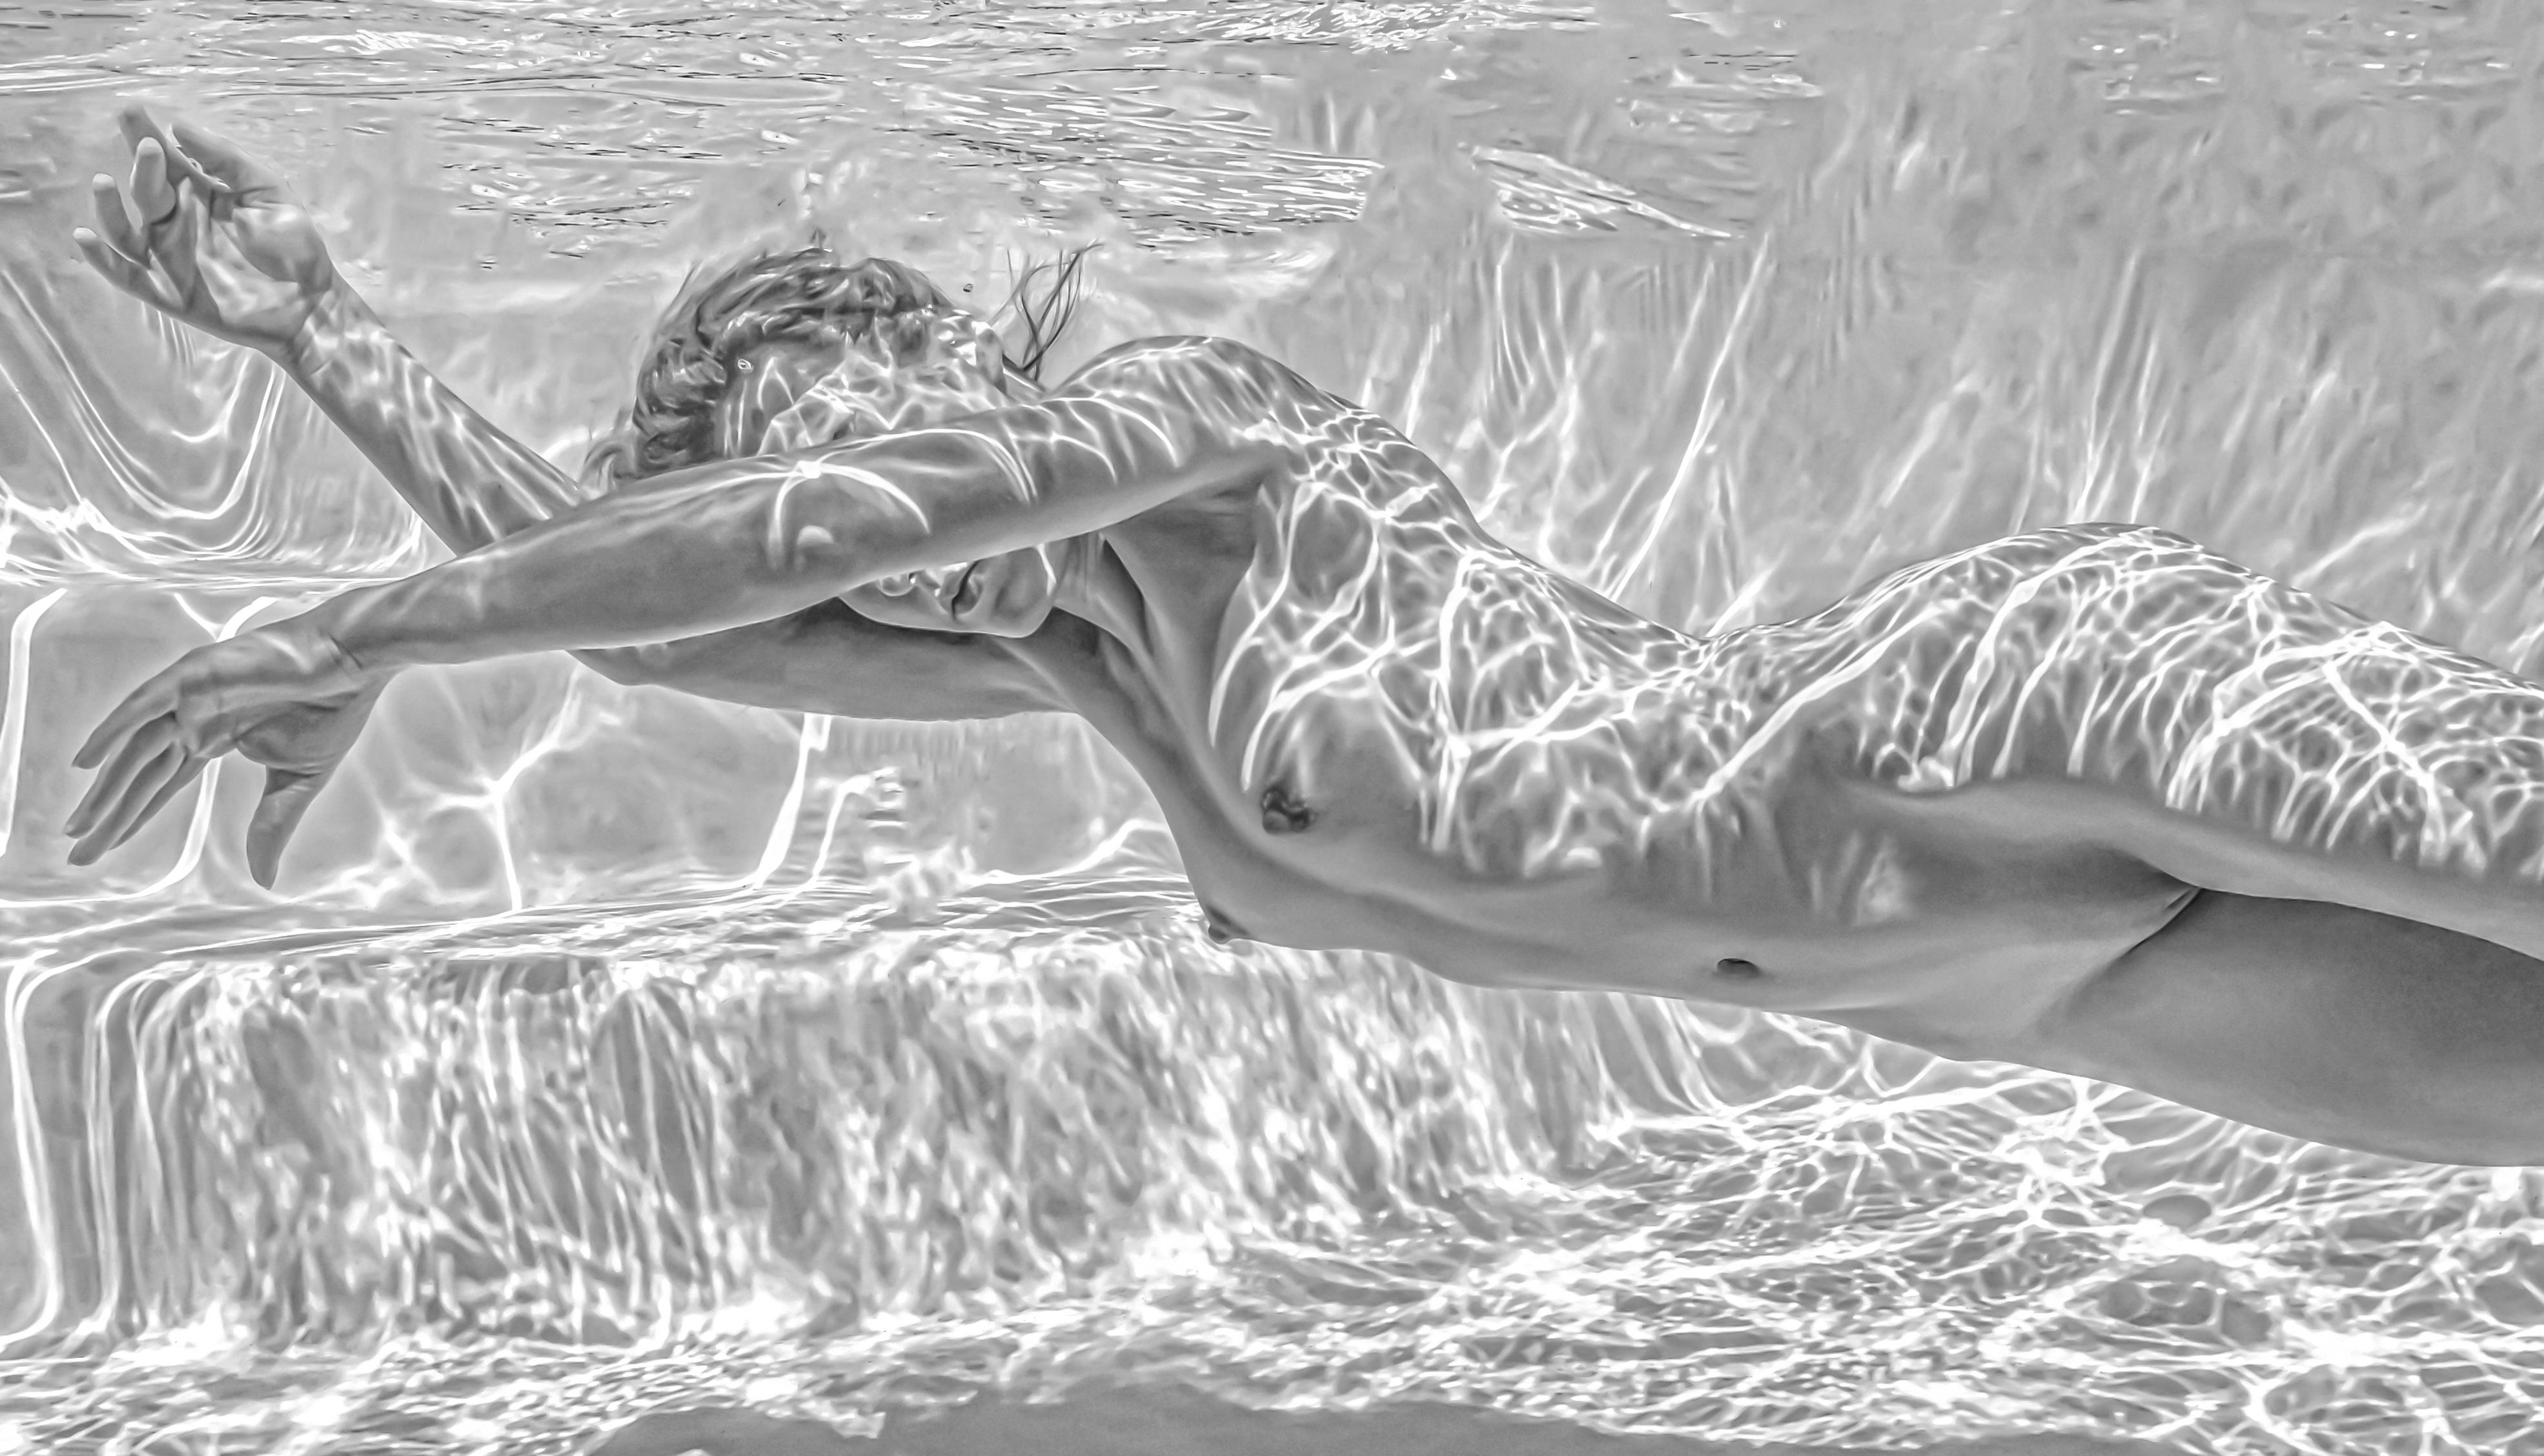 Thunderweb - underwater black & white nude photograph - print on aluminum 24x36